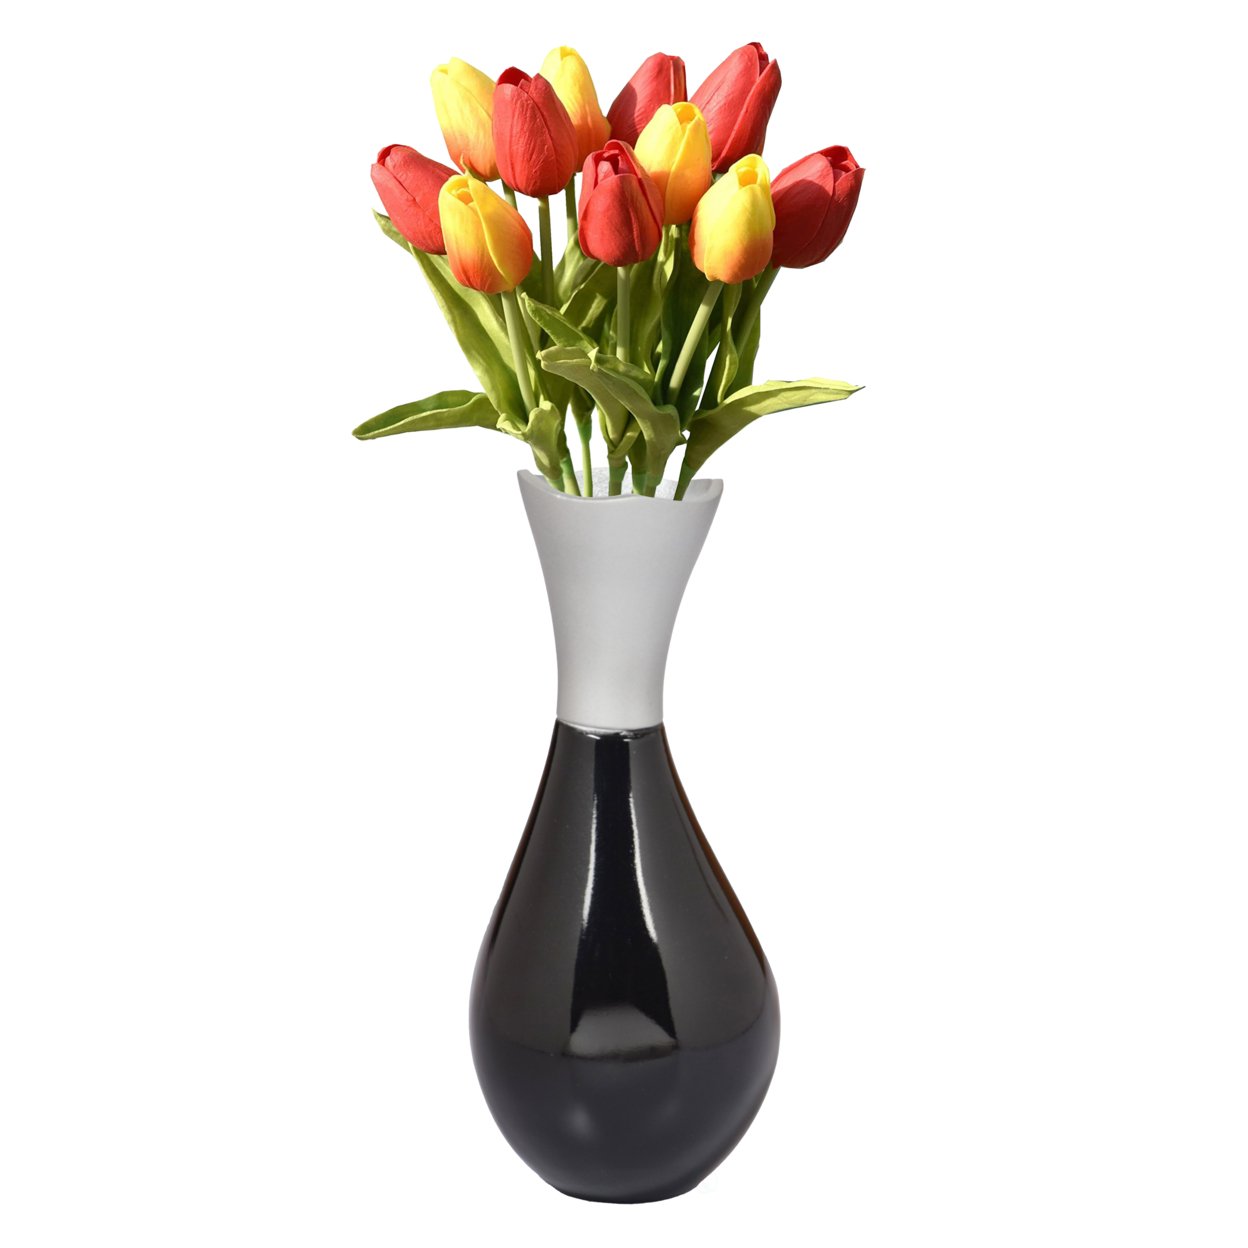 Aluminium-Casted Modern Decorative Flower Table Vase - Large